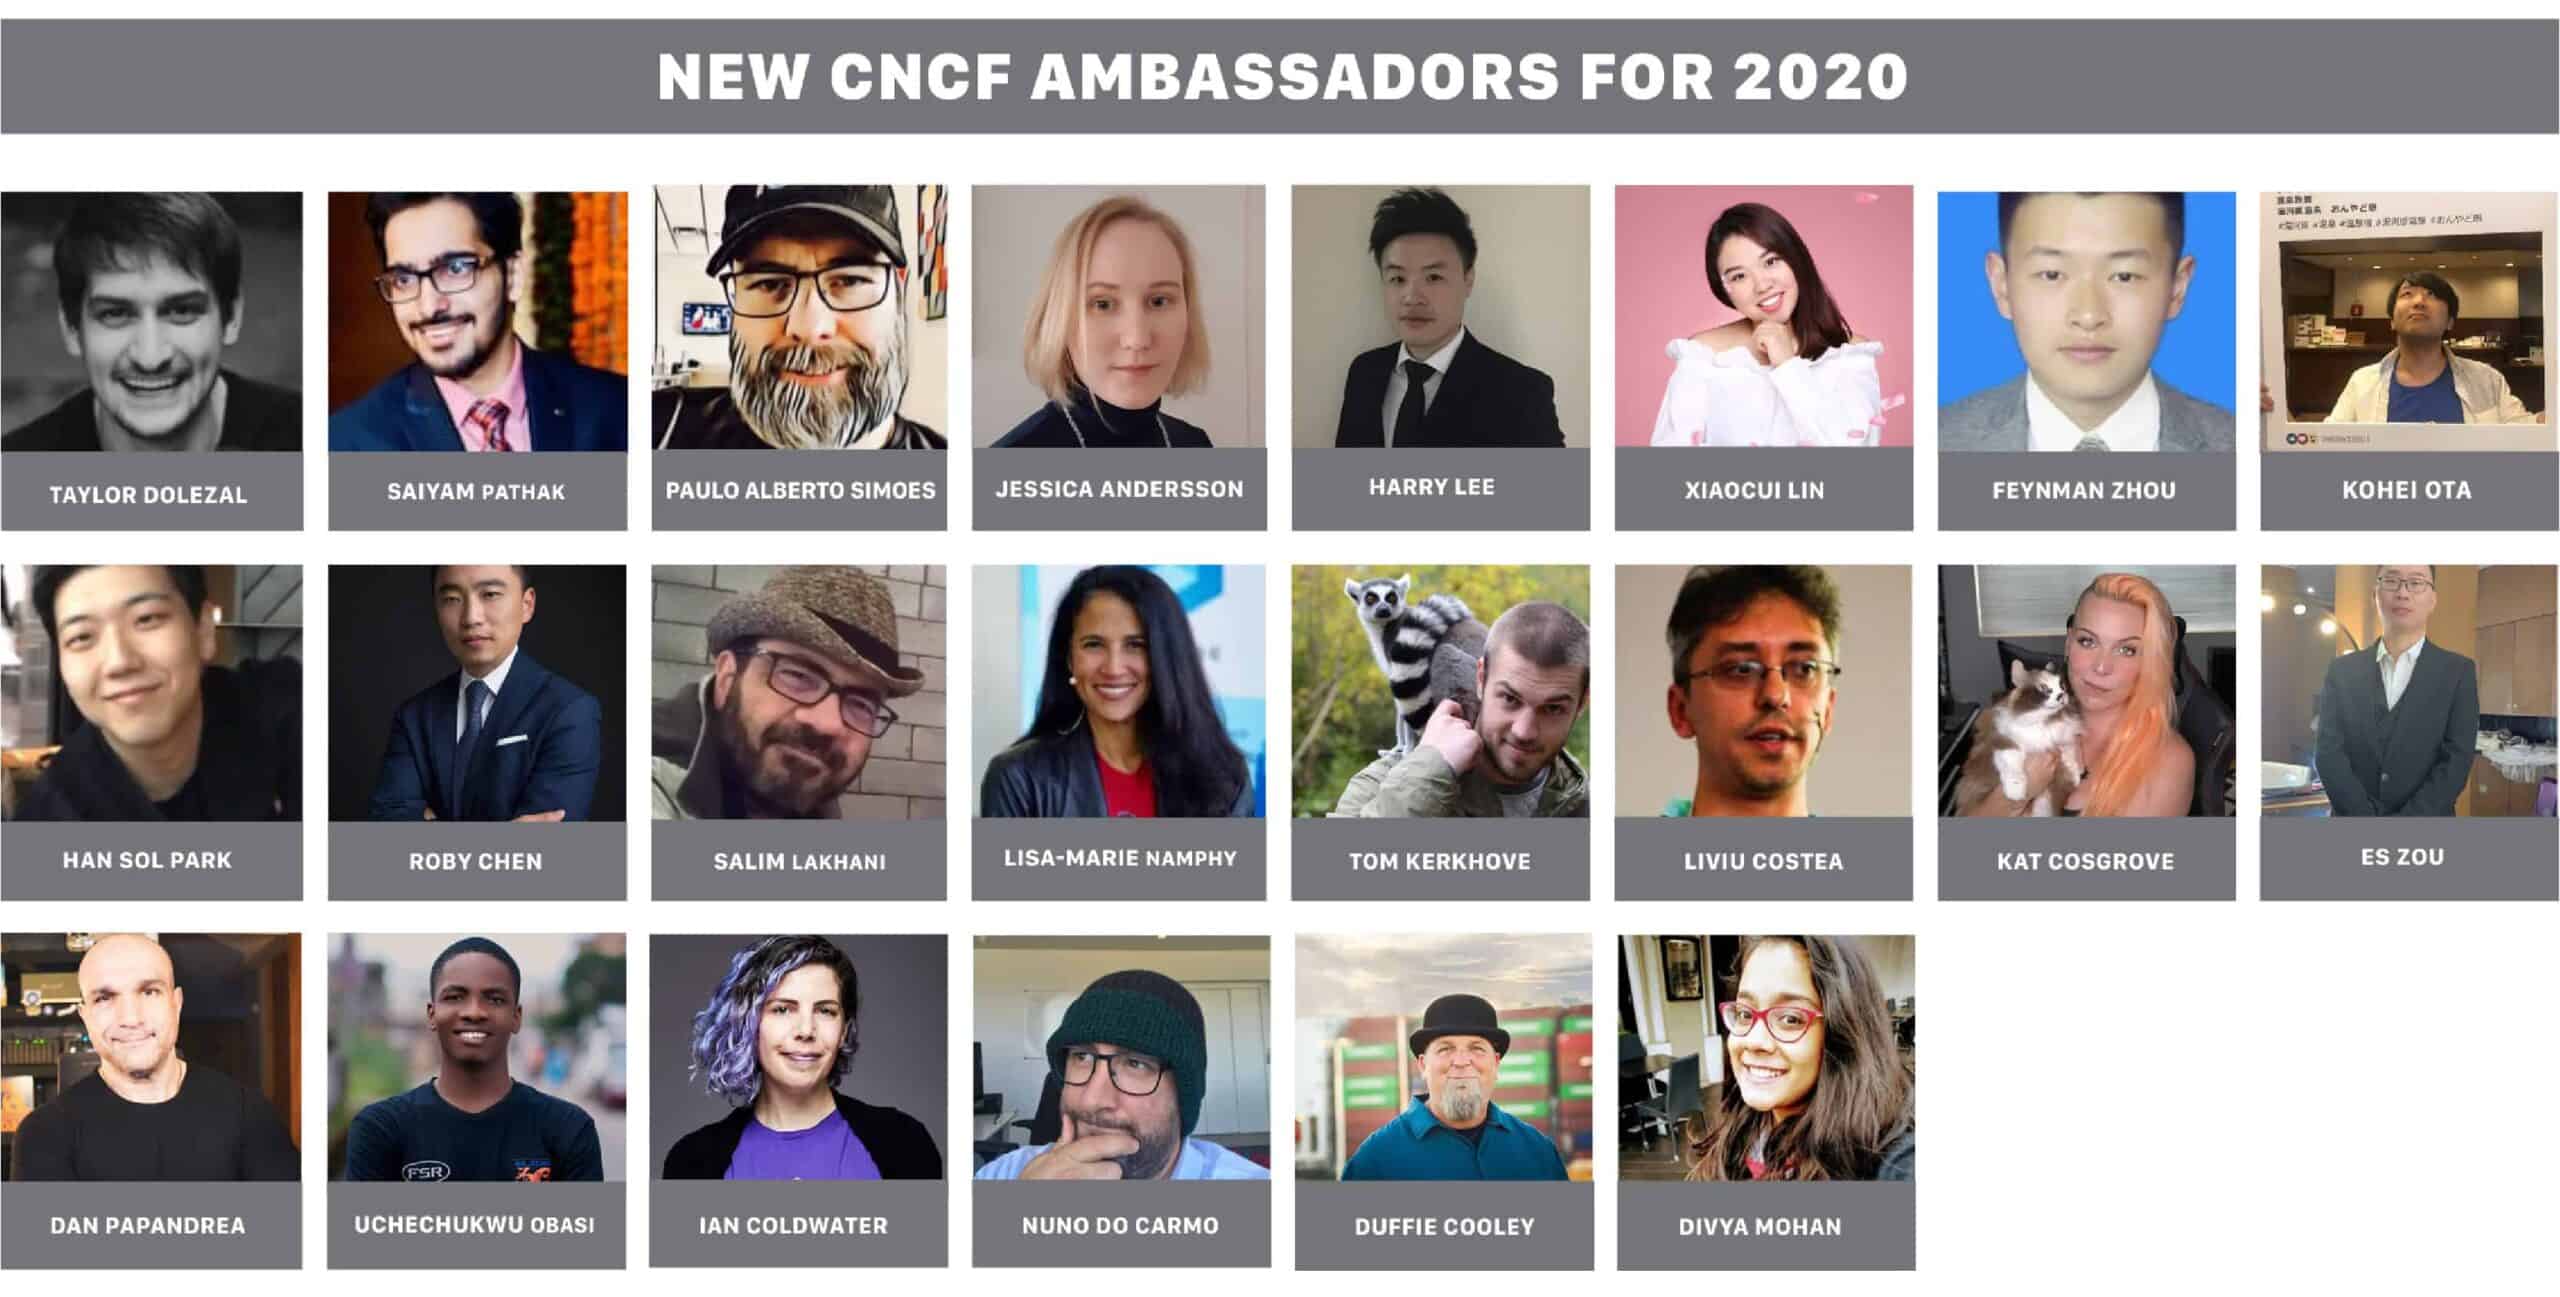 New ambassadors for 2020